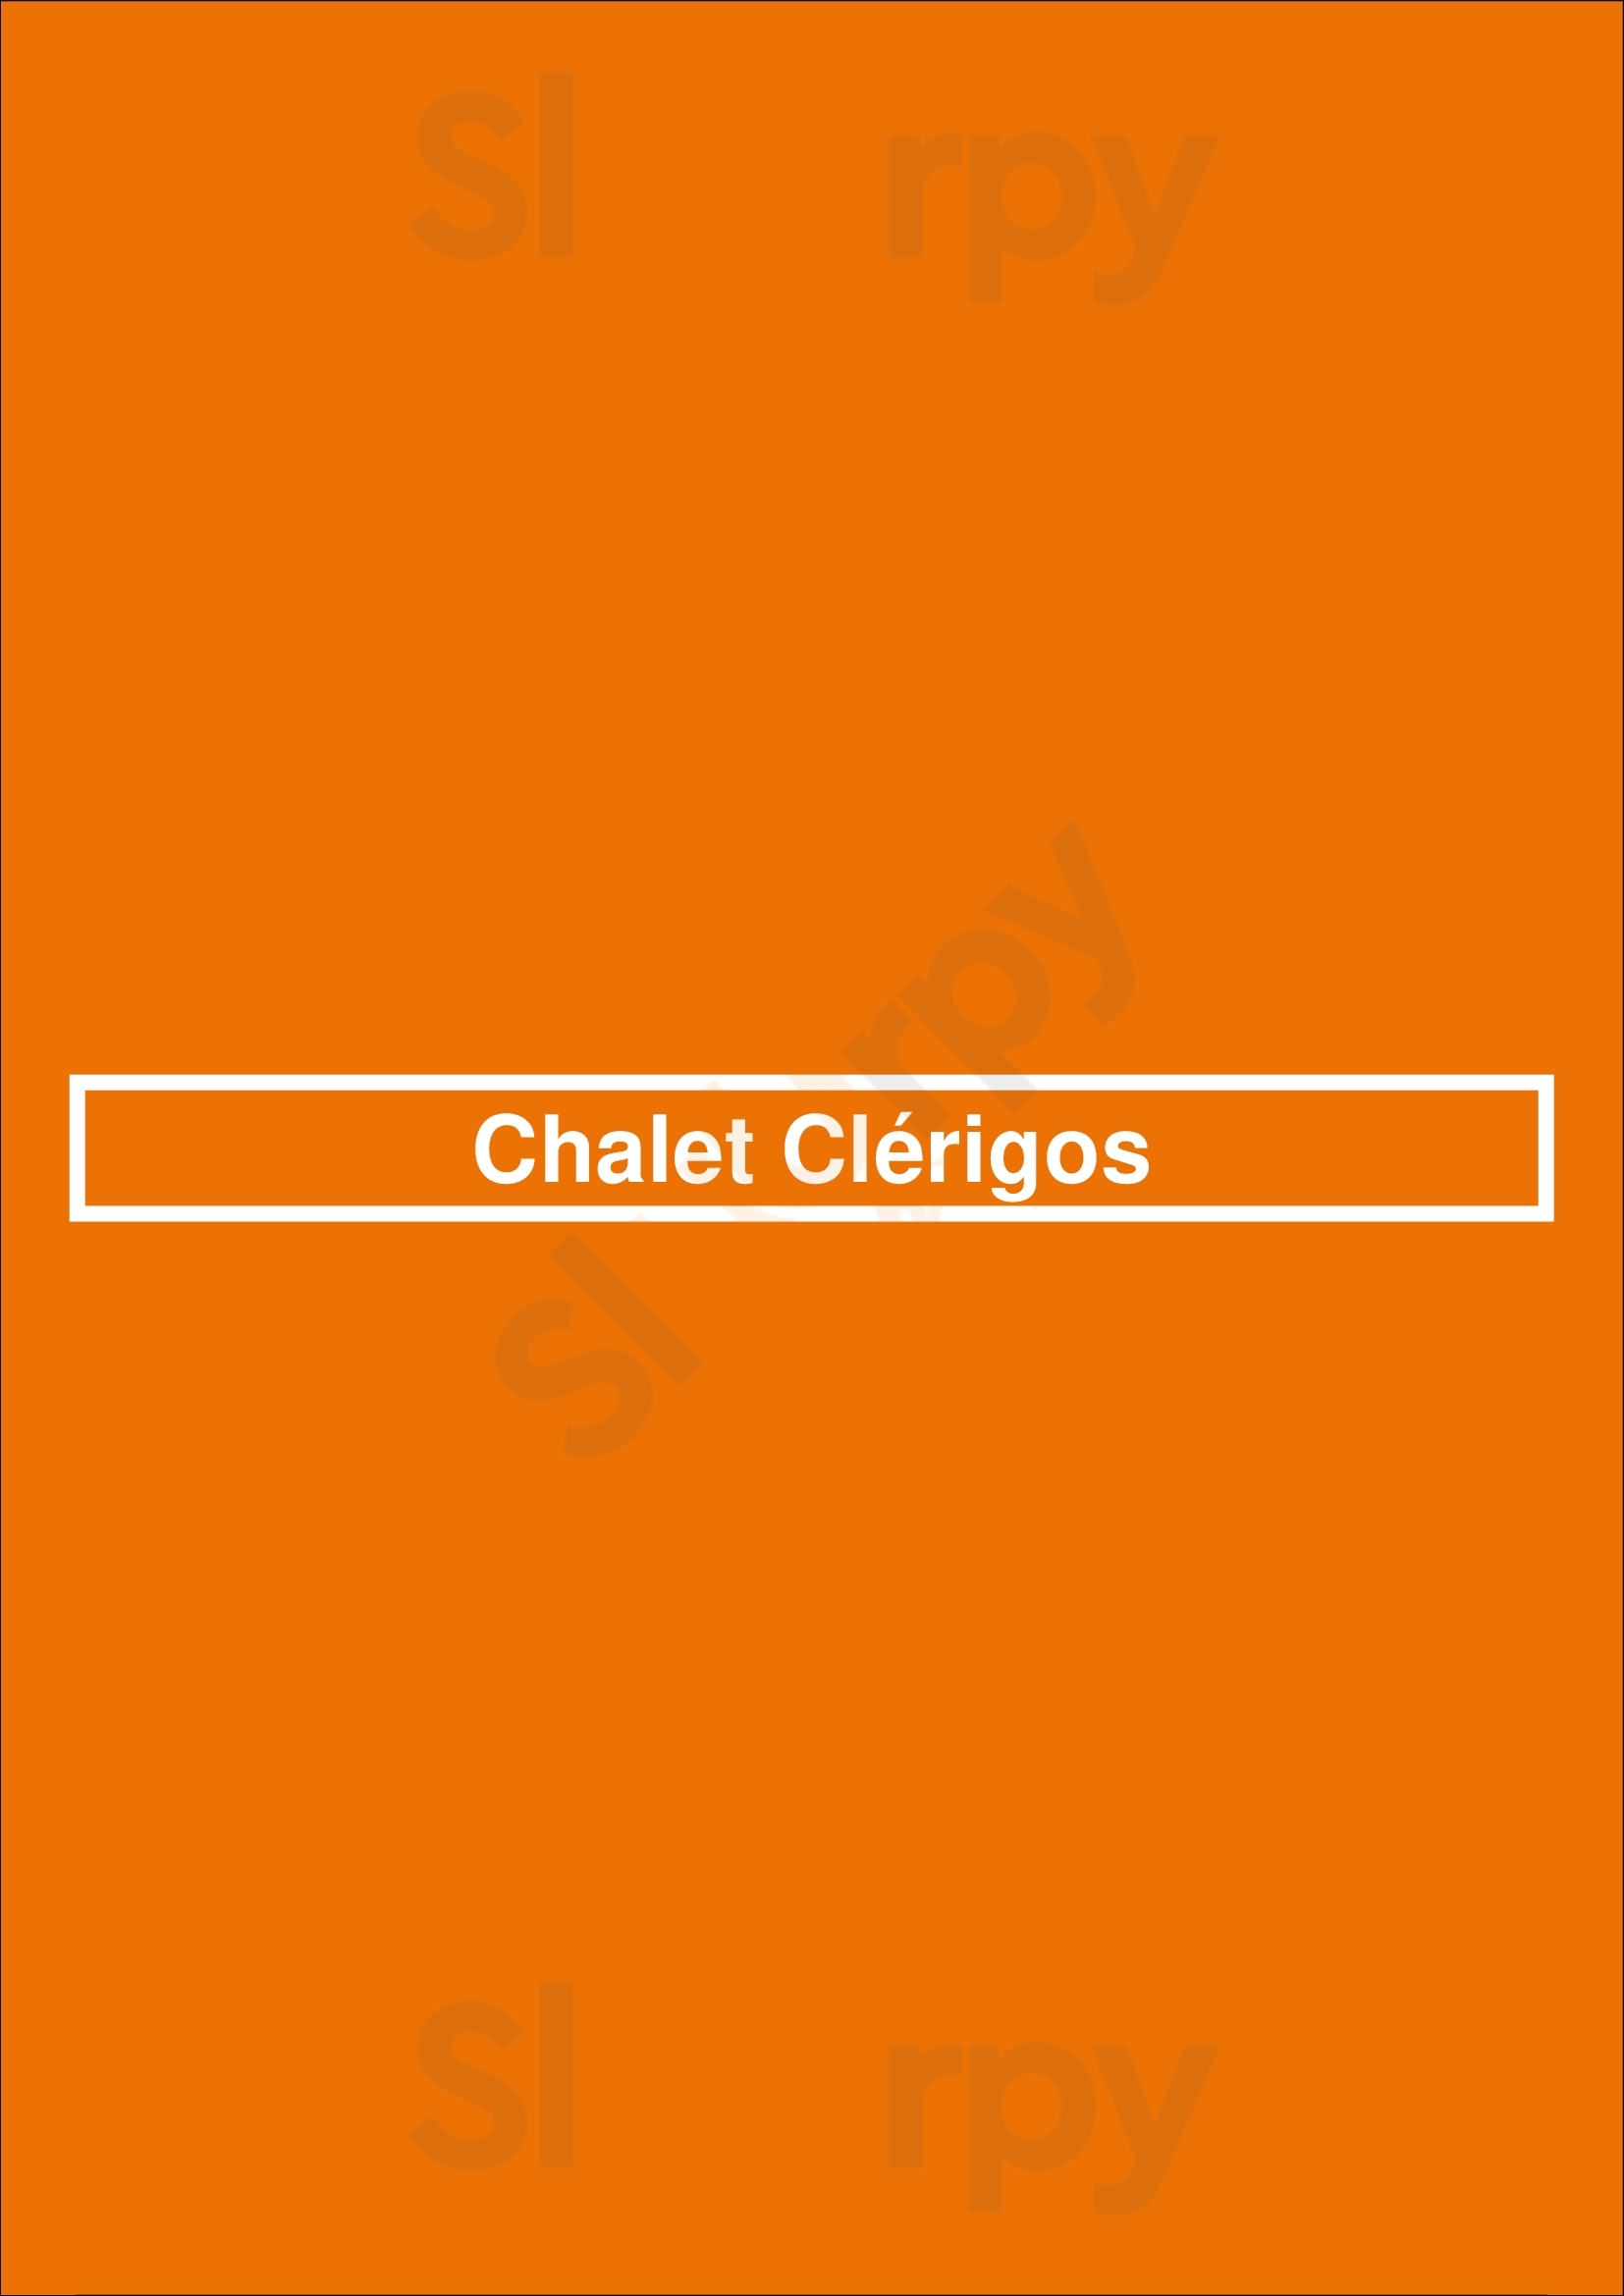 Chalet Clérigos Porto Menu - 1